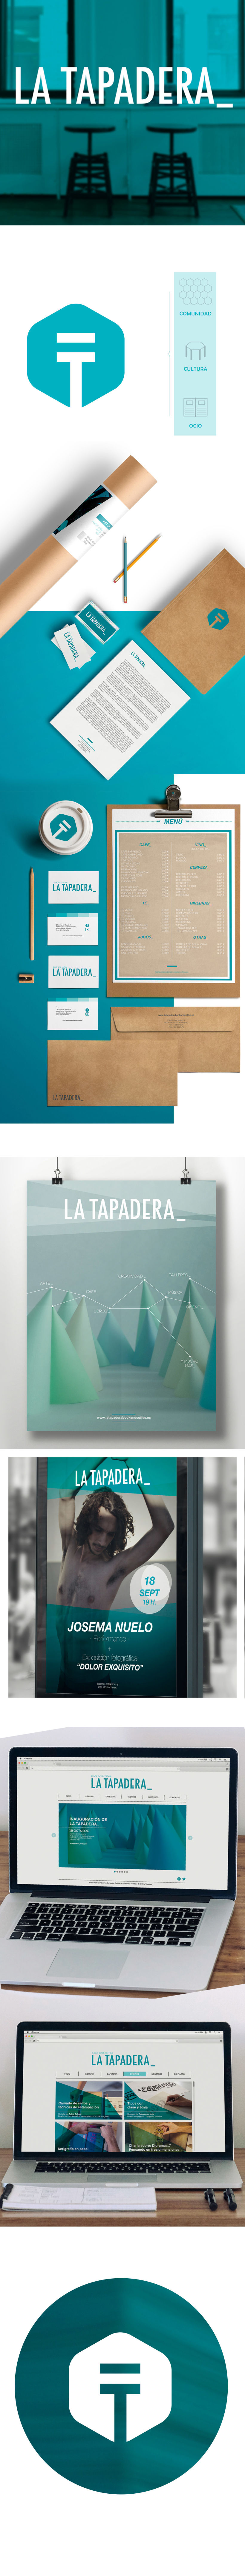 La Tapadera -1